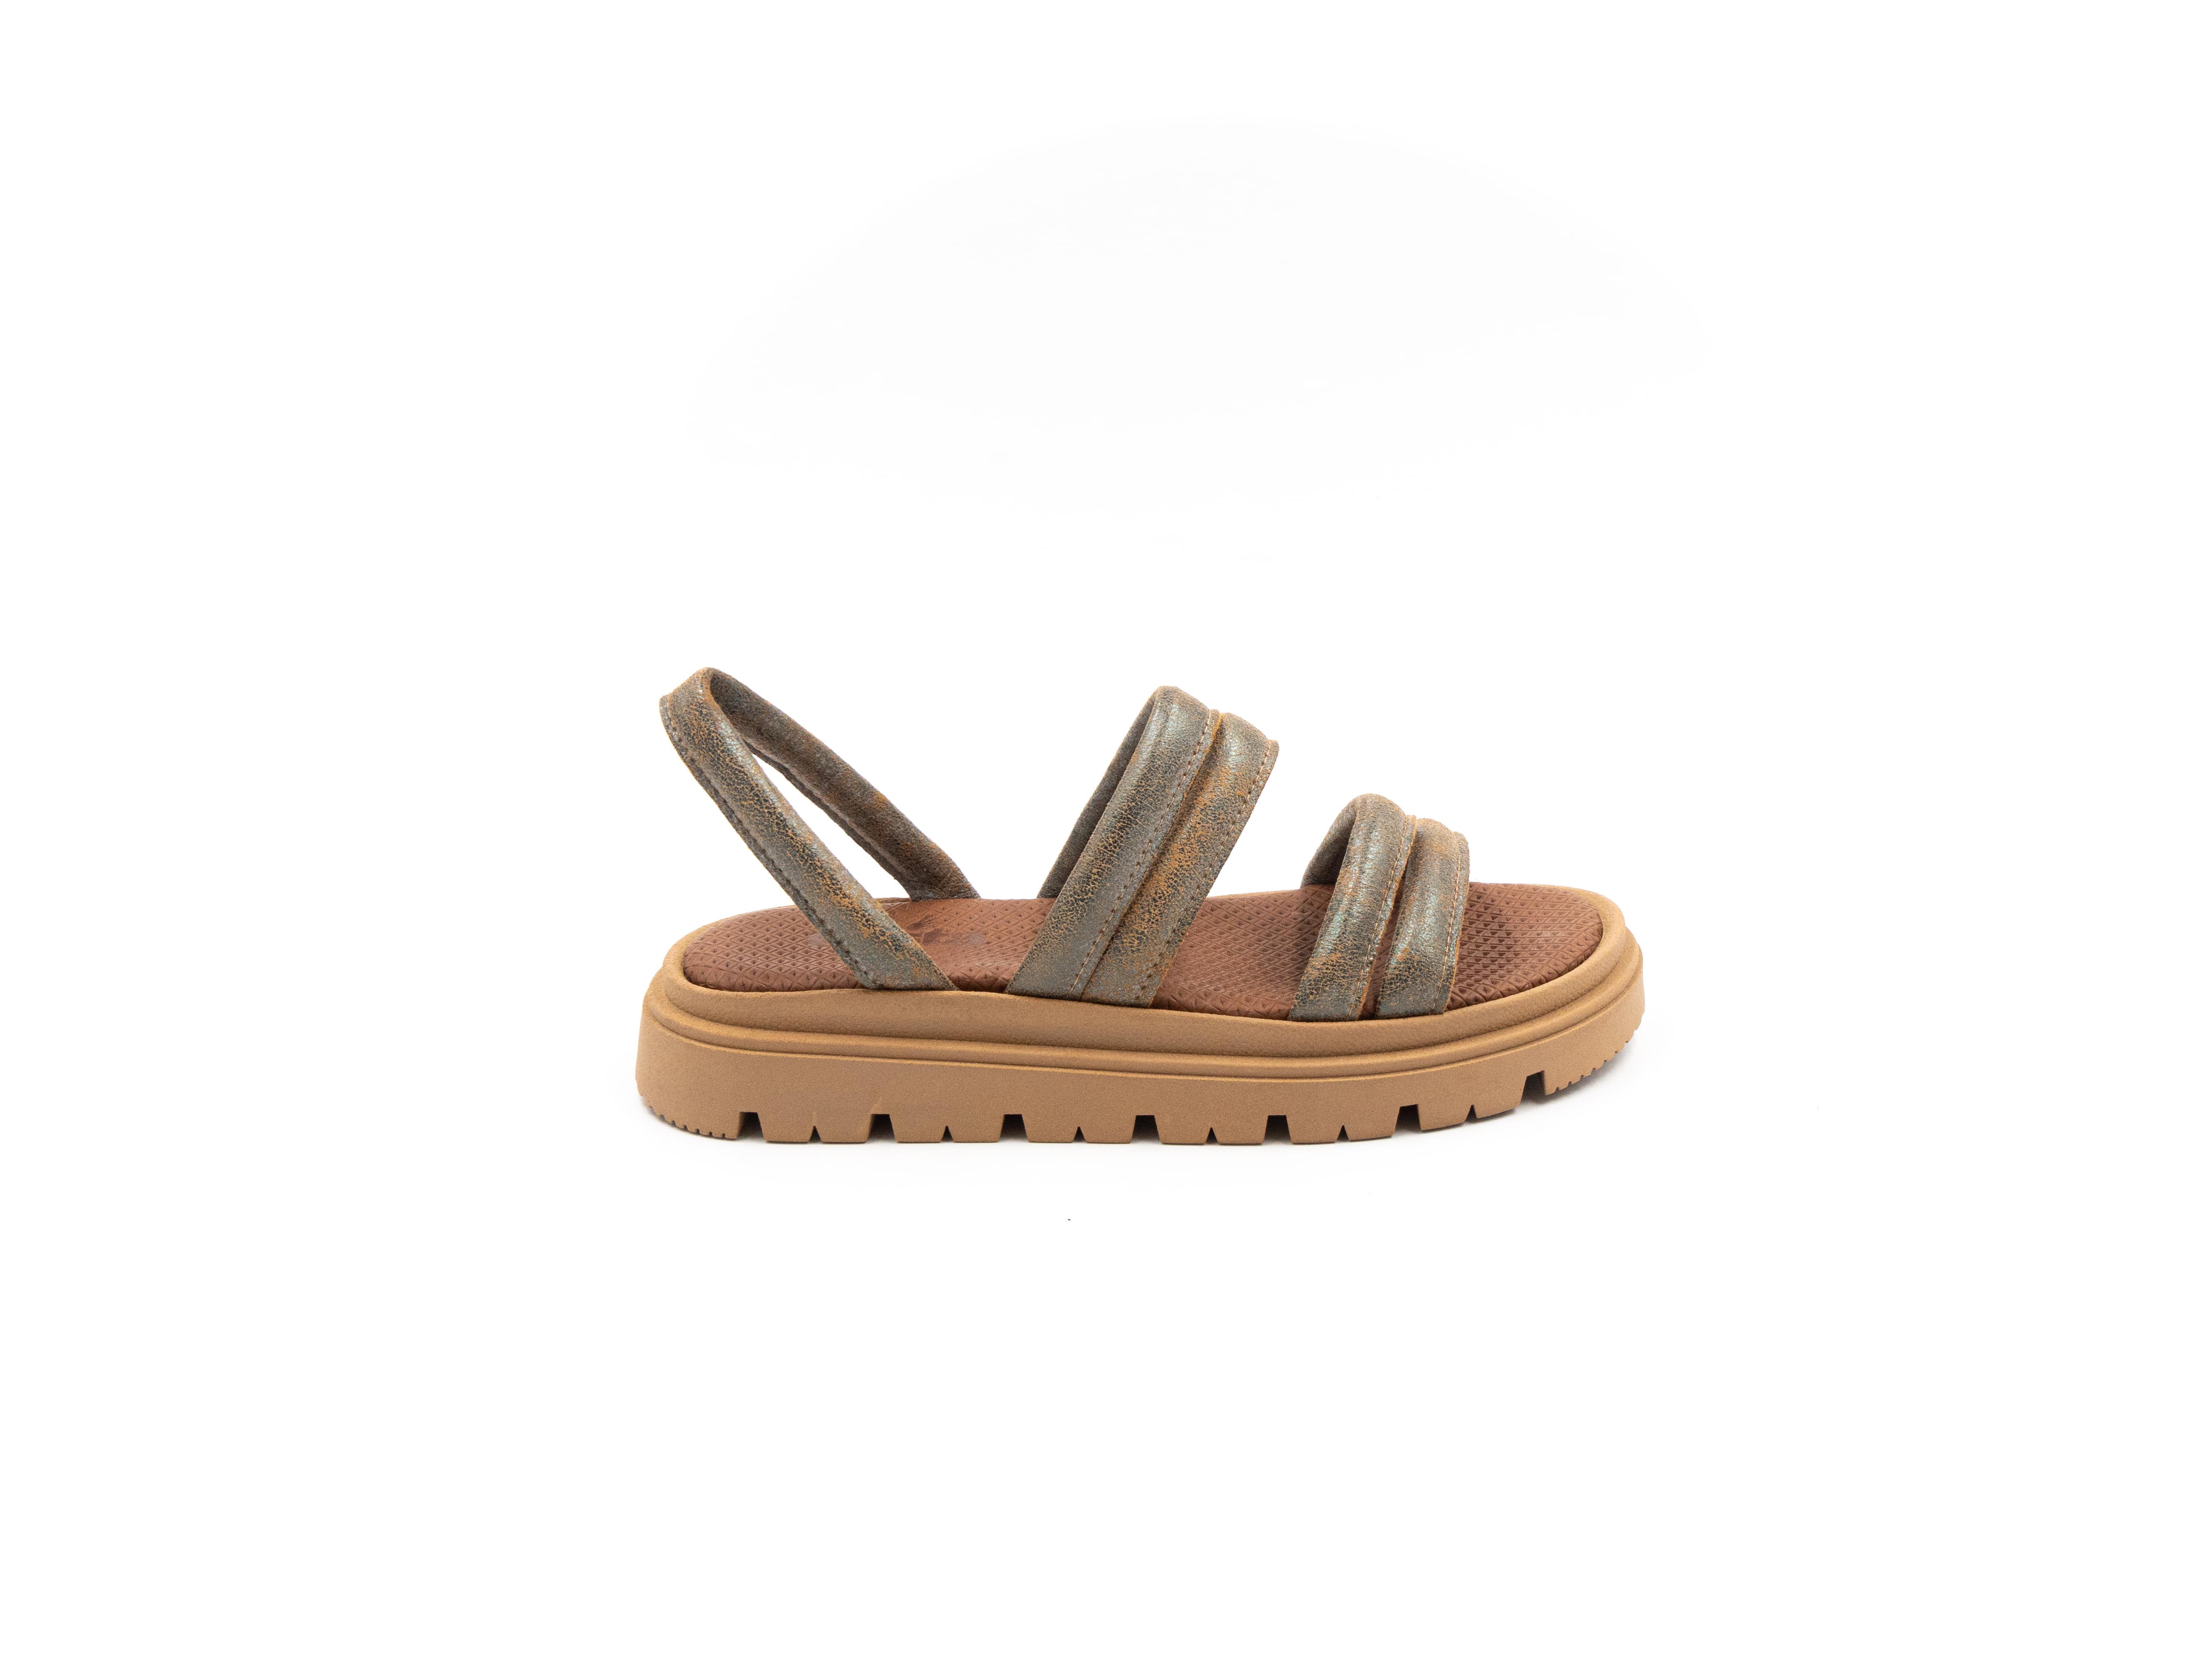 Flat sandal in brown tones.